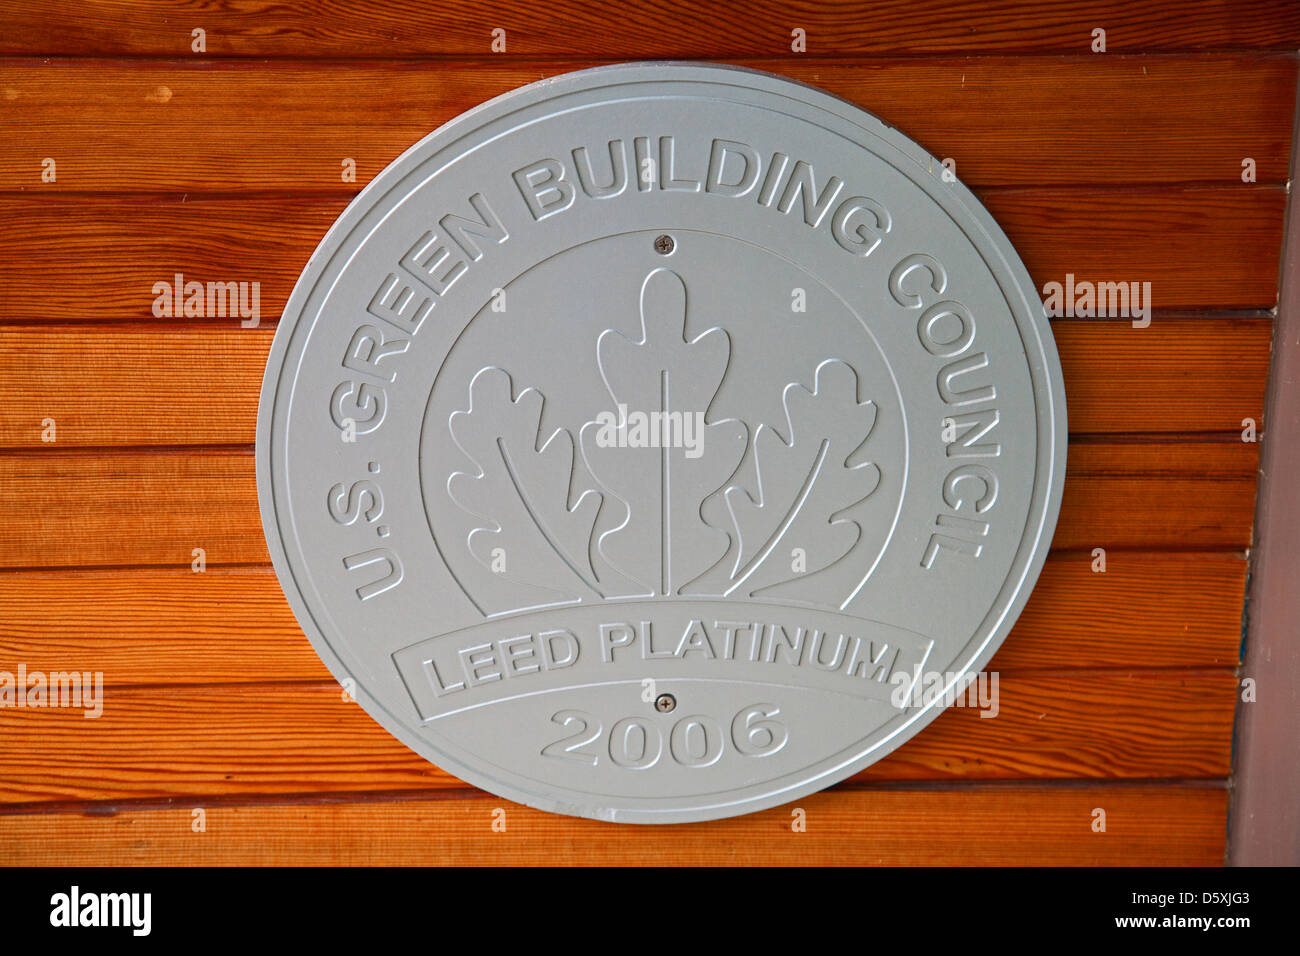 Leed (Leadership in Energy and Environmental Design) Platinum rating medallion Stock Photo